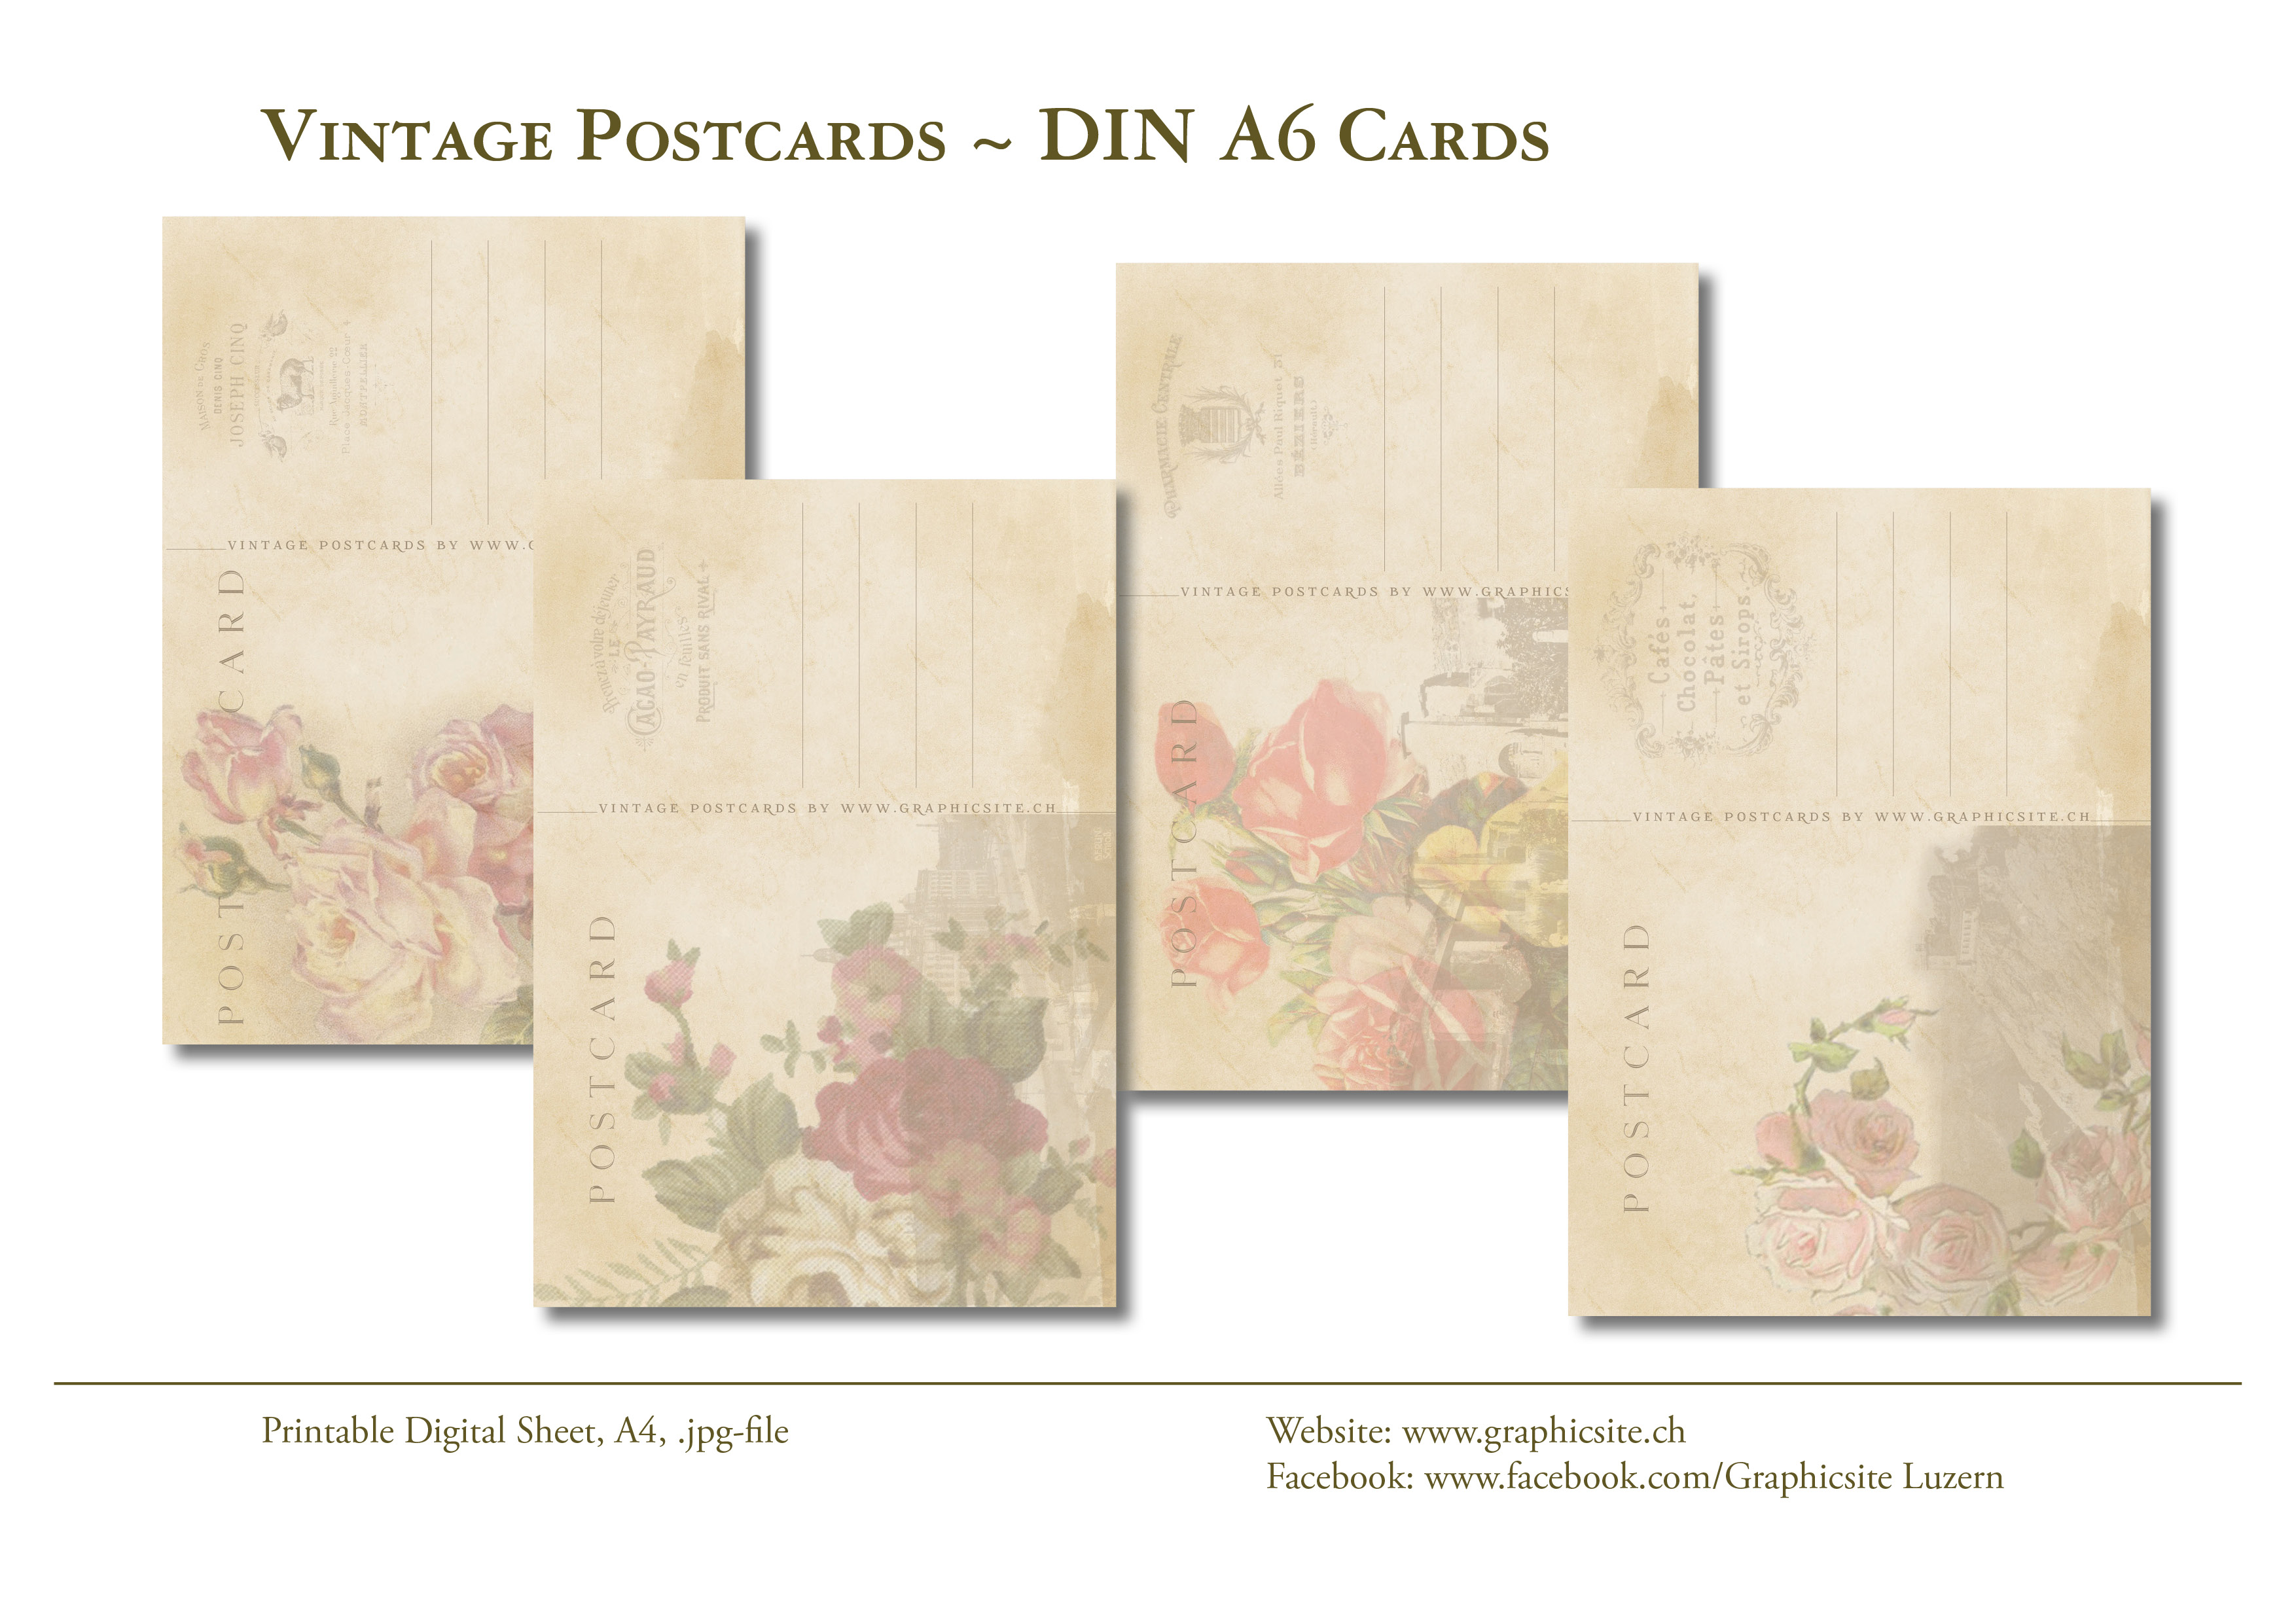 Printable Digital Sheets - DIN A6 Cards - VintagePostcards - #postcards, #cards, #greetingcards, #vintage, #antique, #downloads, #printables, 